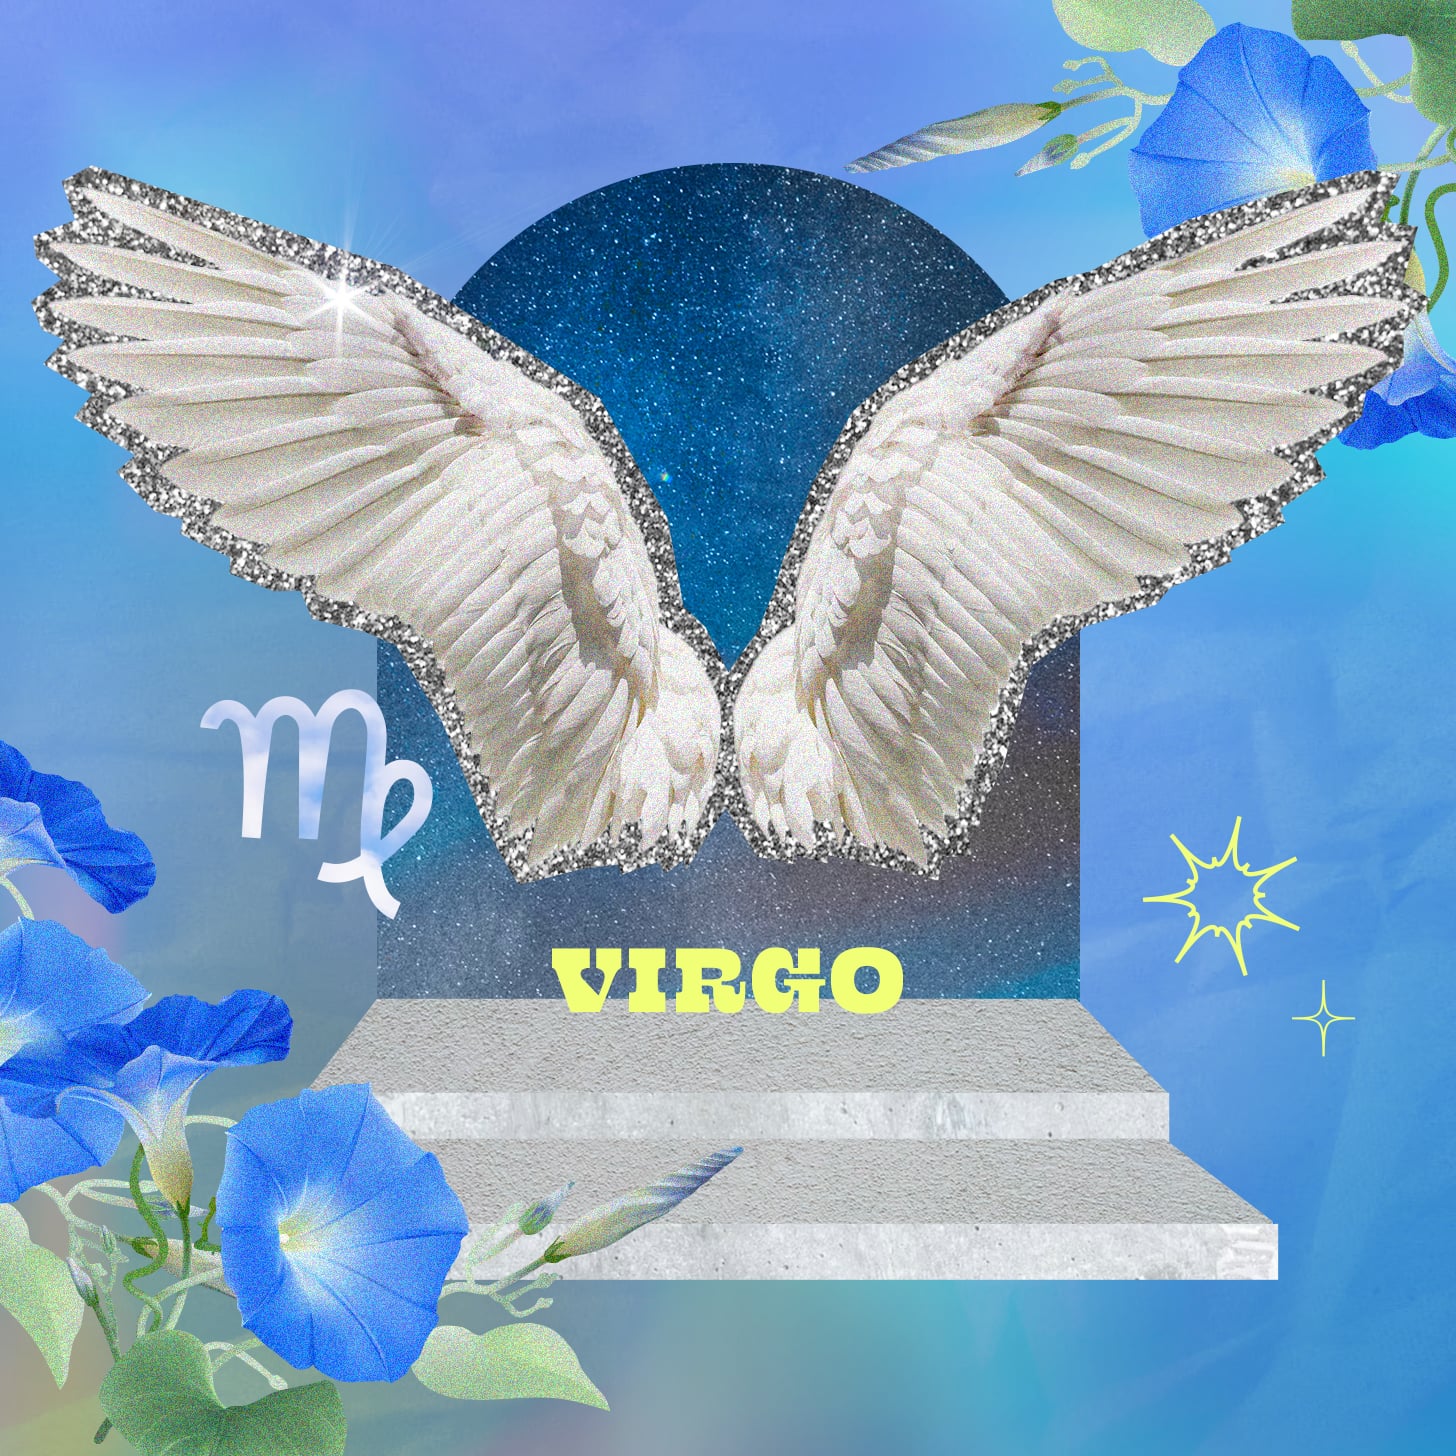 Virgo weekly horoscope for August 21, 2022